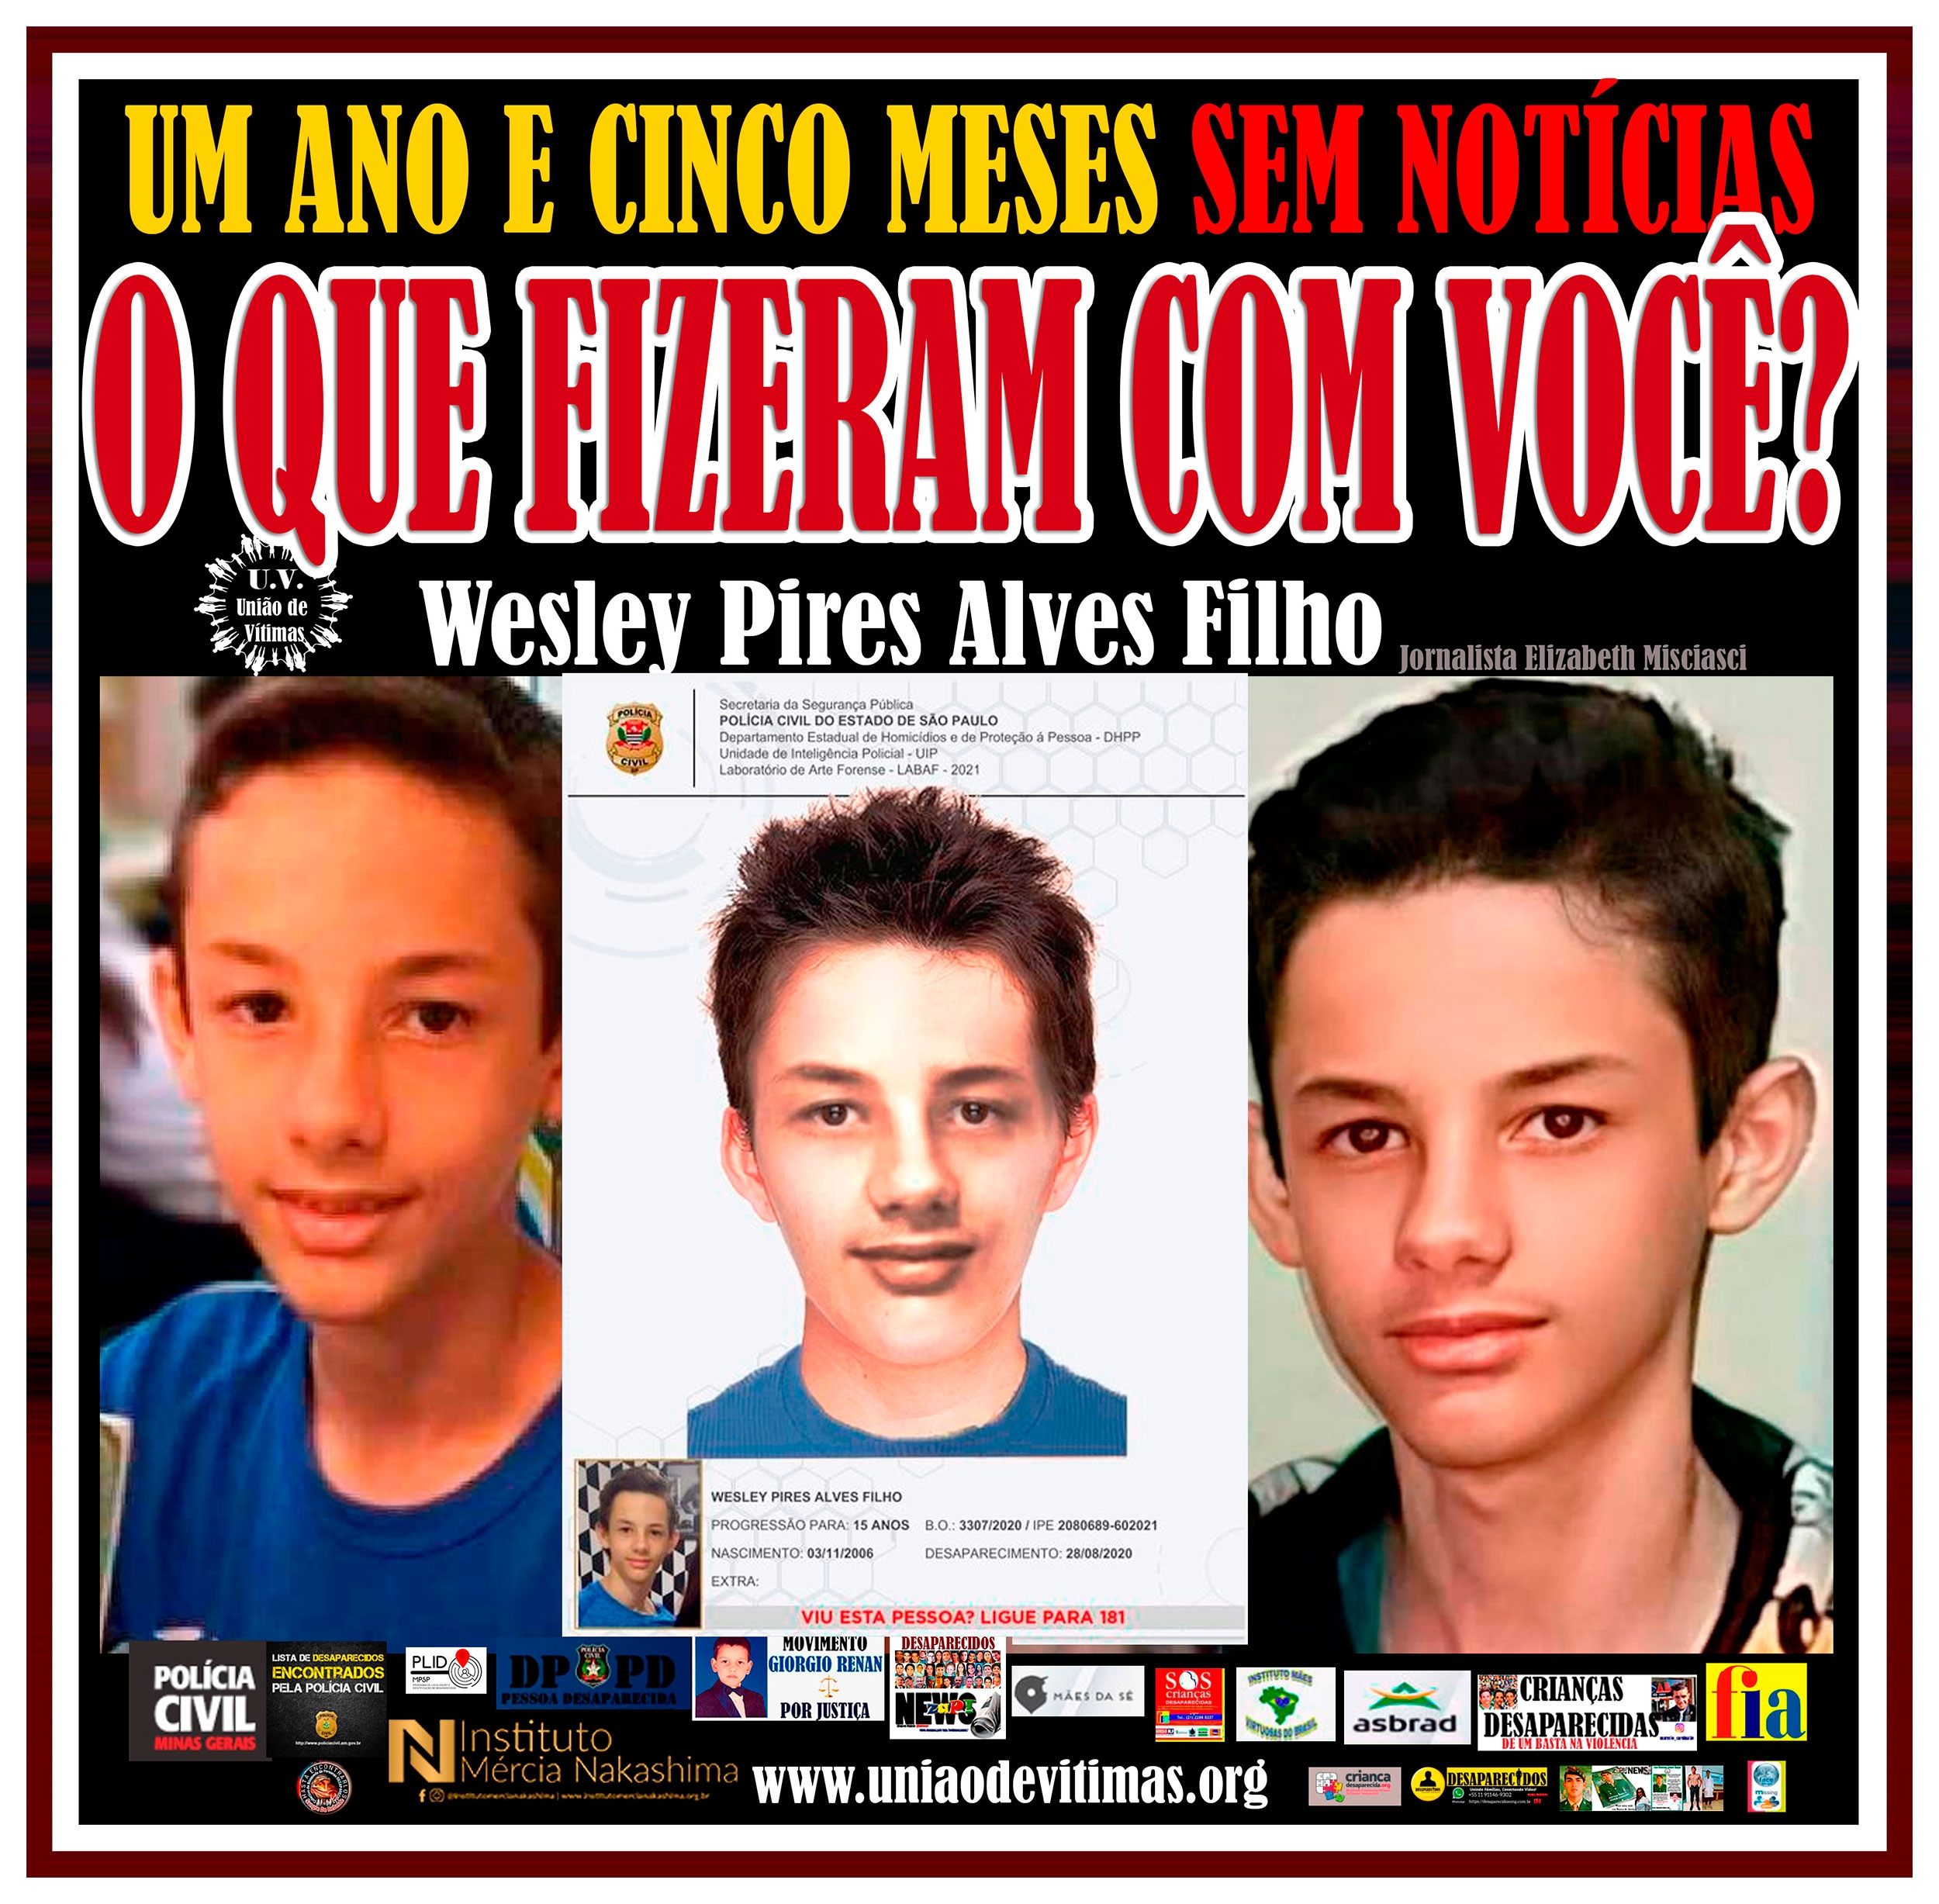 Wesley Pires Alves Filho